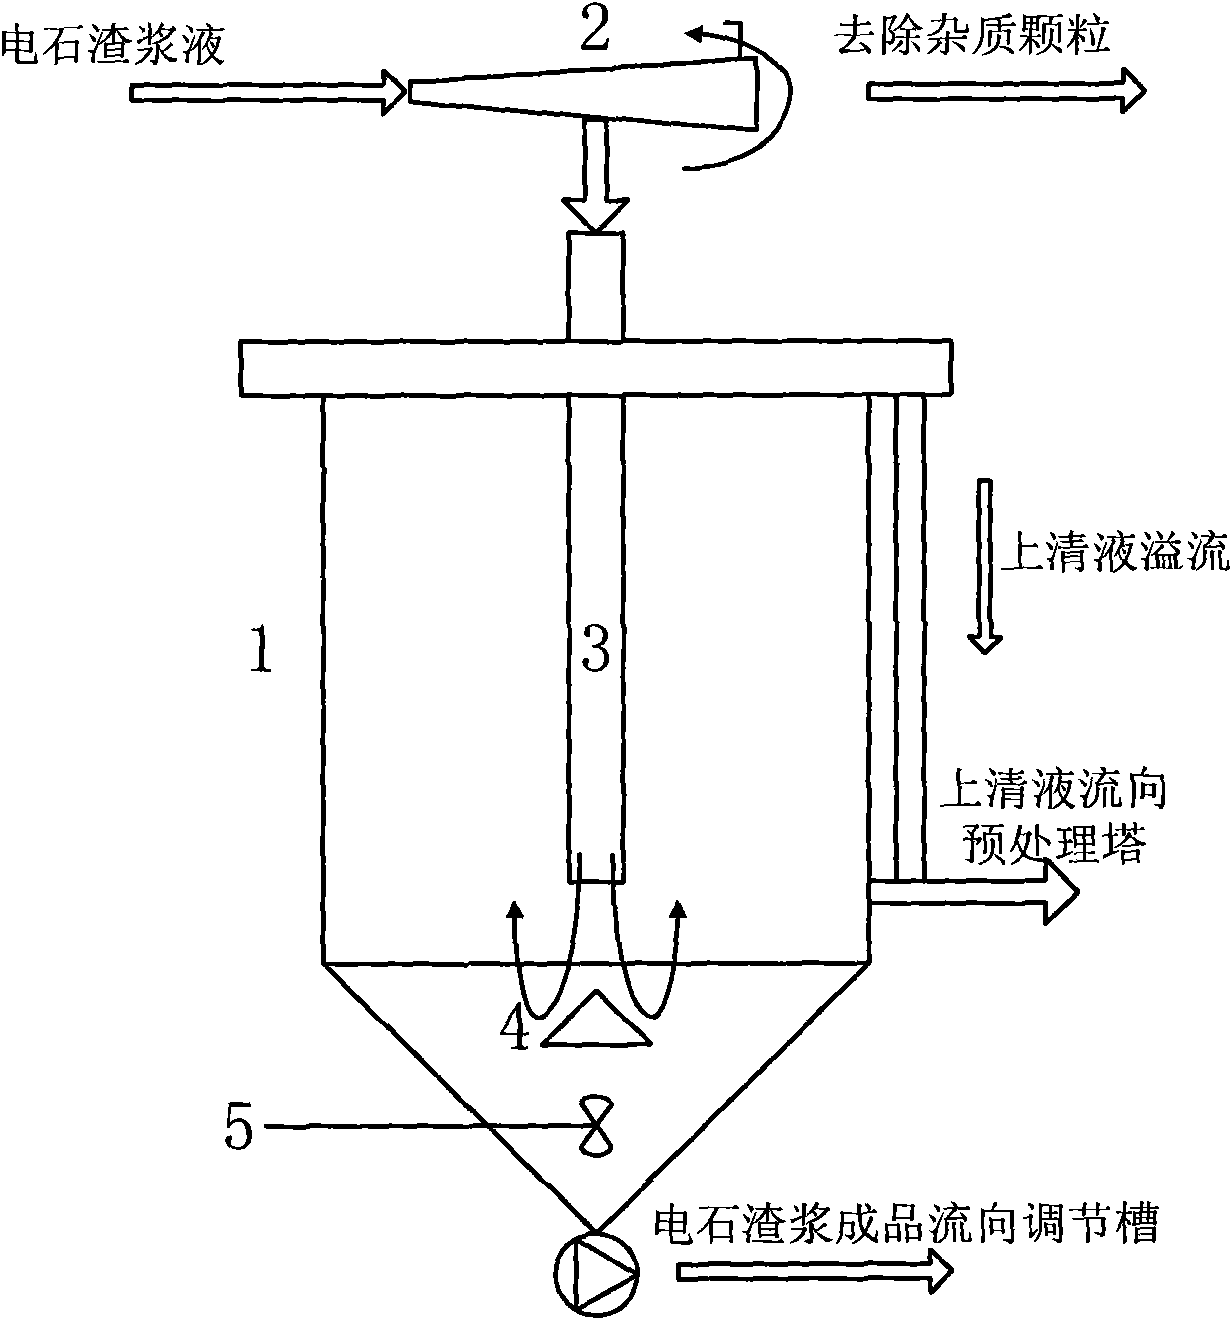 Wet flue gas desulphurizing method utilizing carbide slag slurry and device thereof